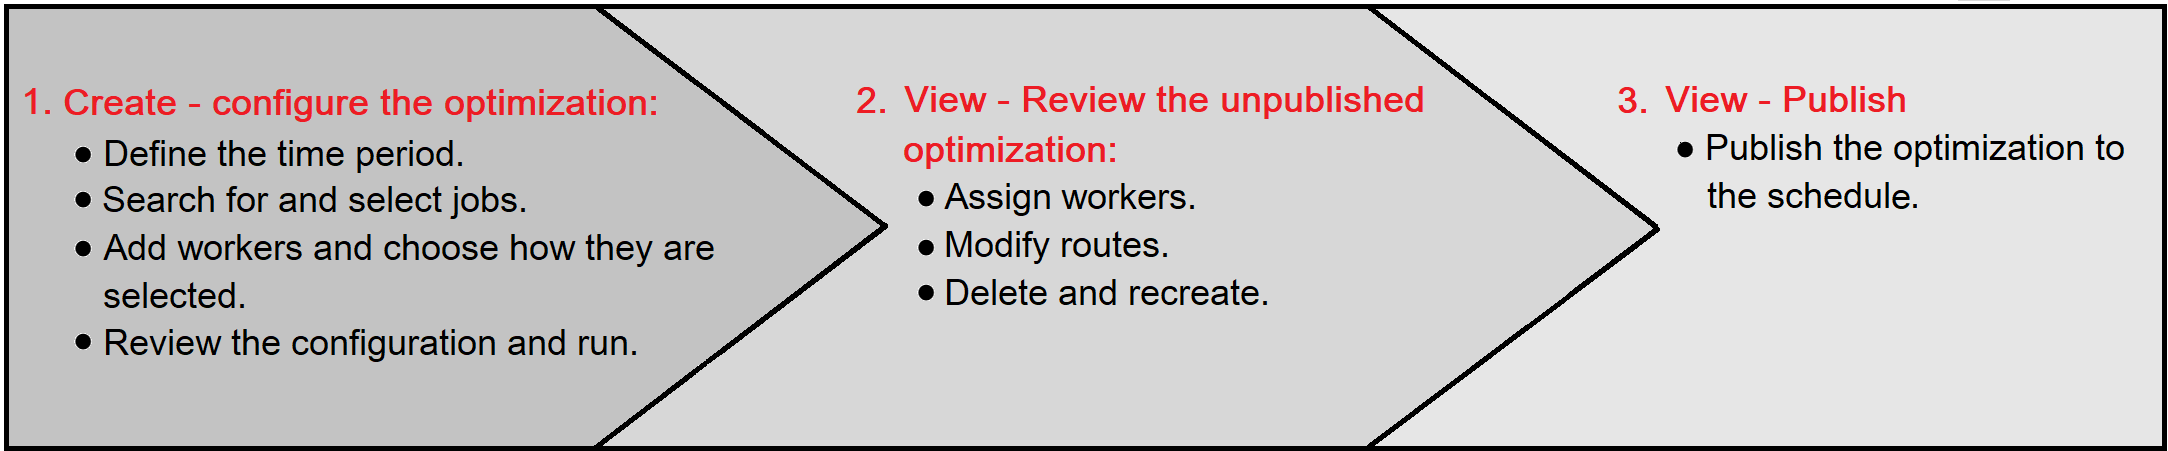 Optimization_process.png